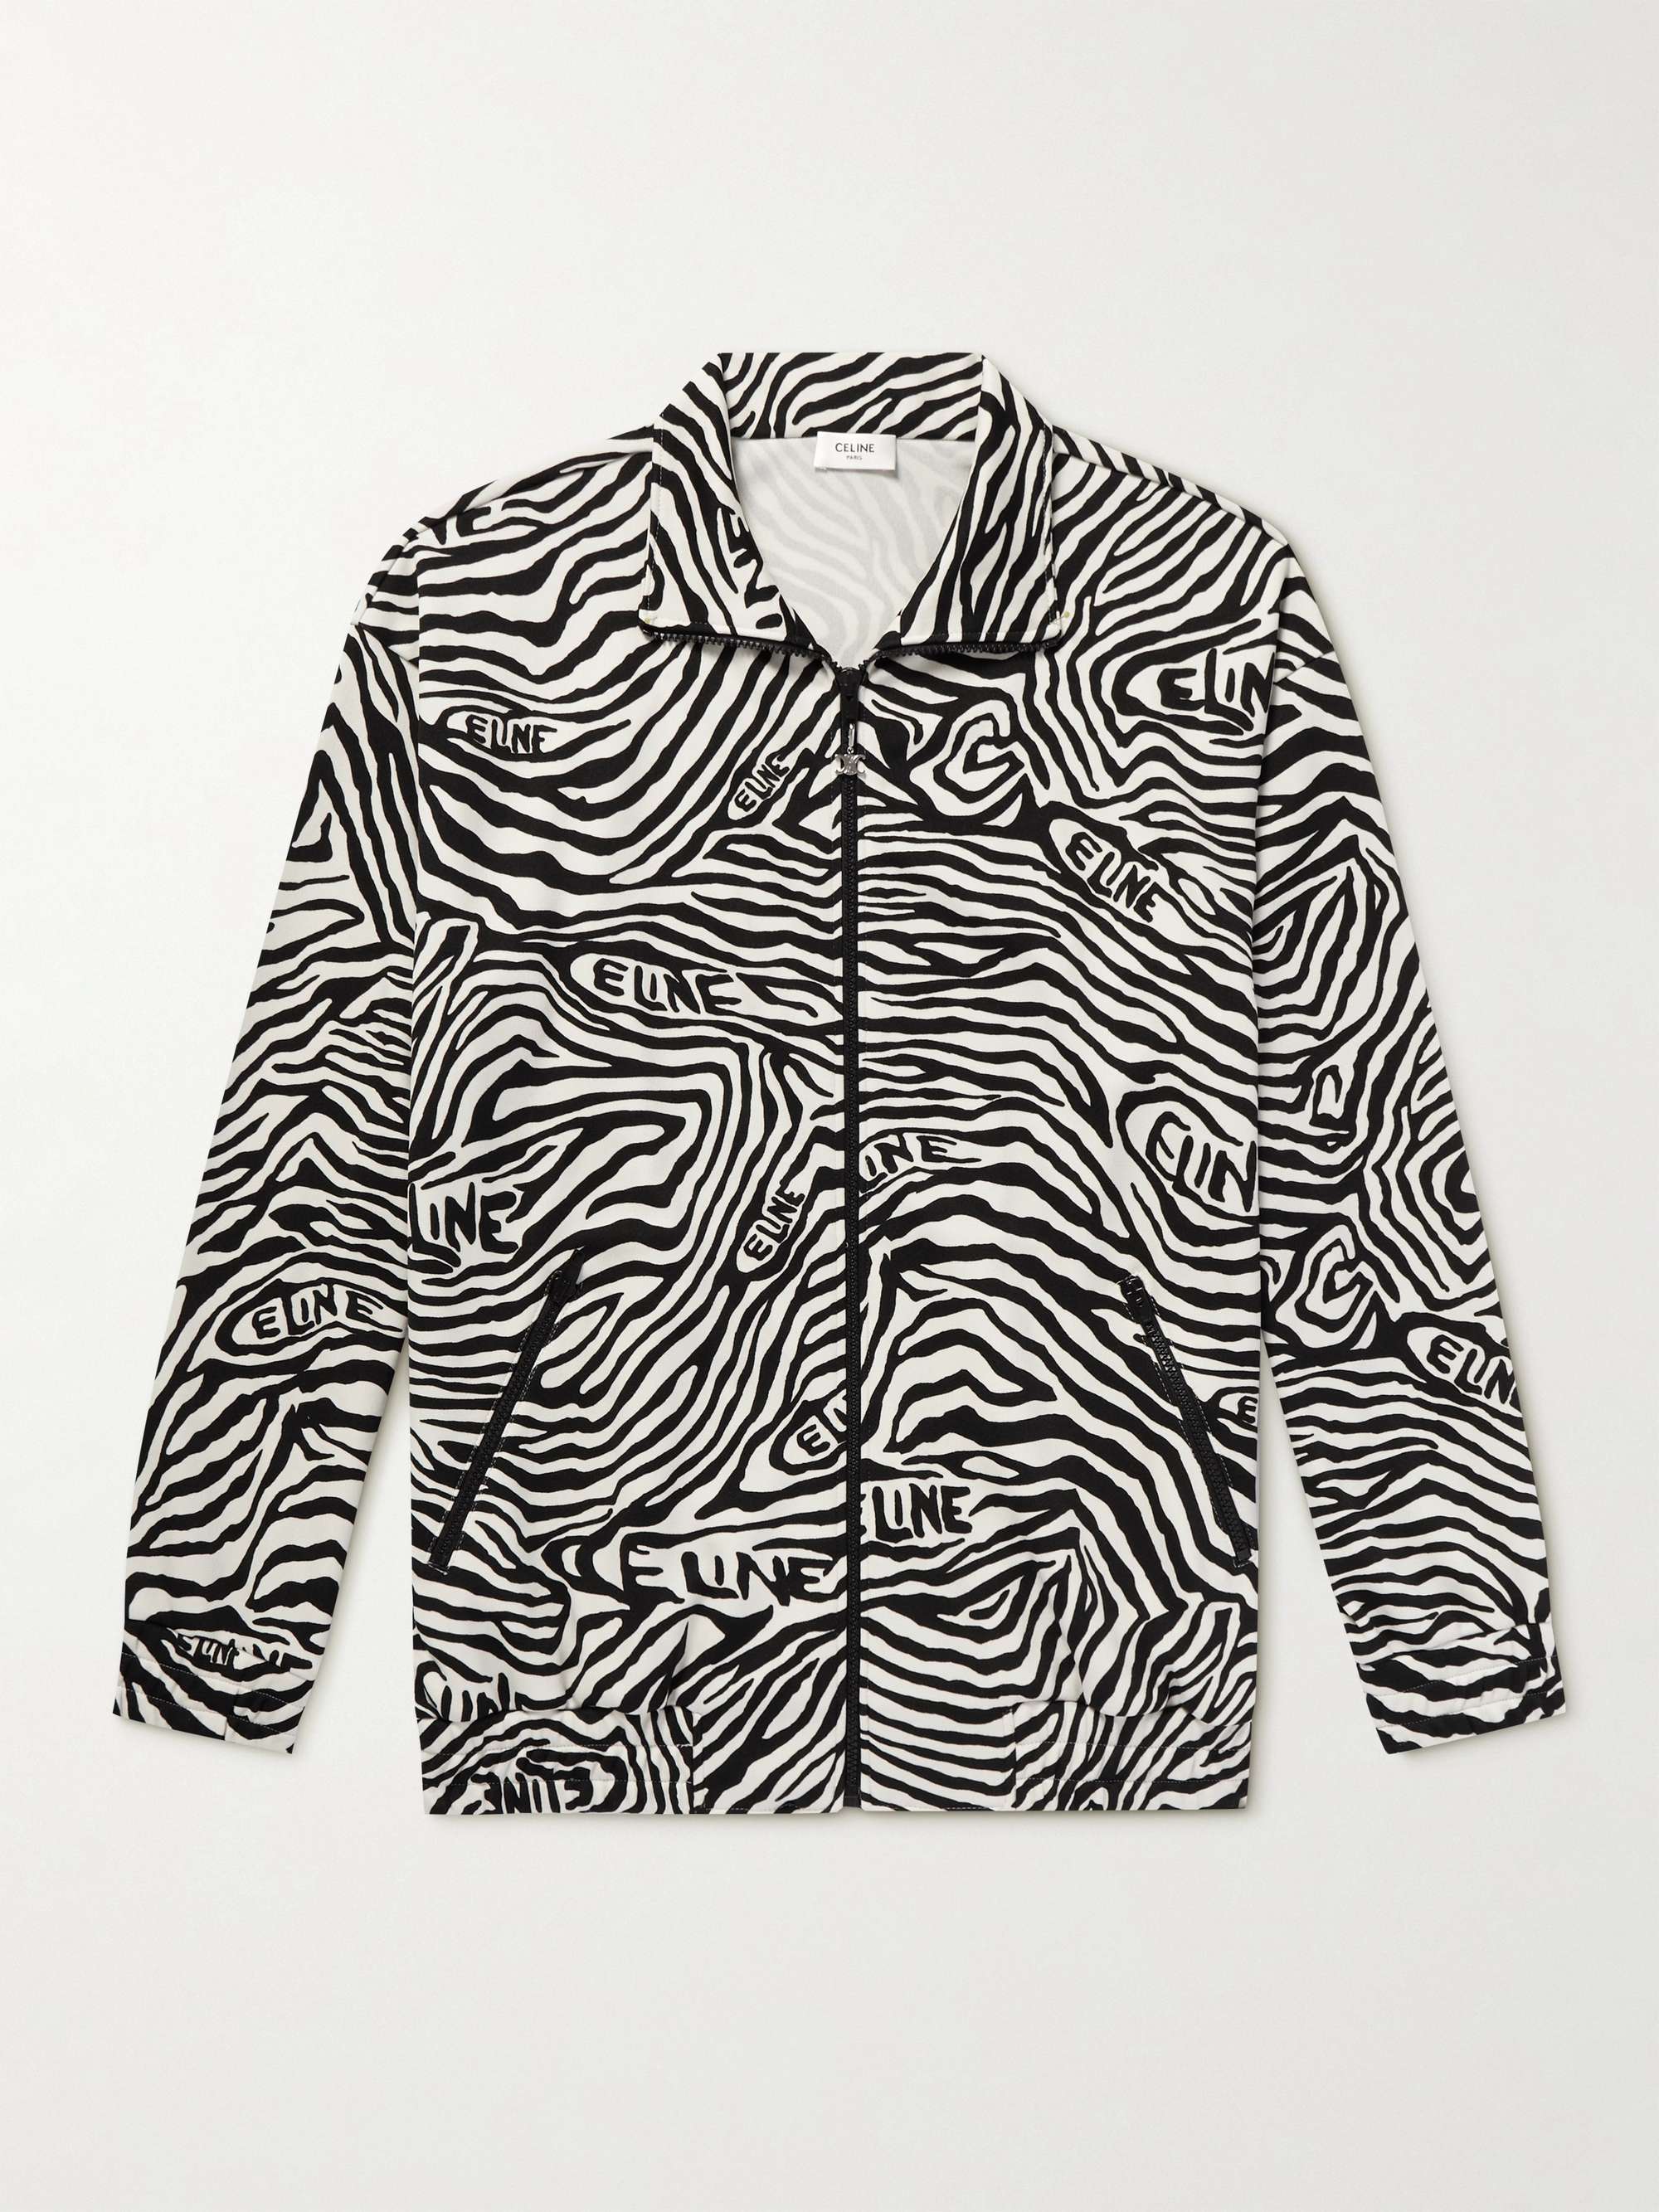 White Zebra-Print Jersey Zip-Up Sweatshirt | CELINE HOMME | MR PORTER